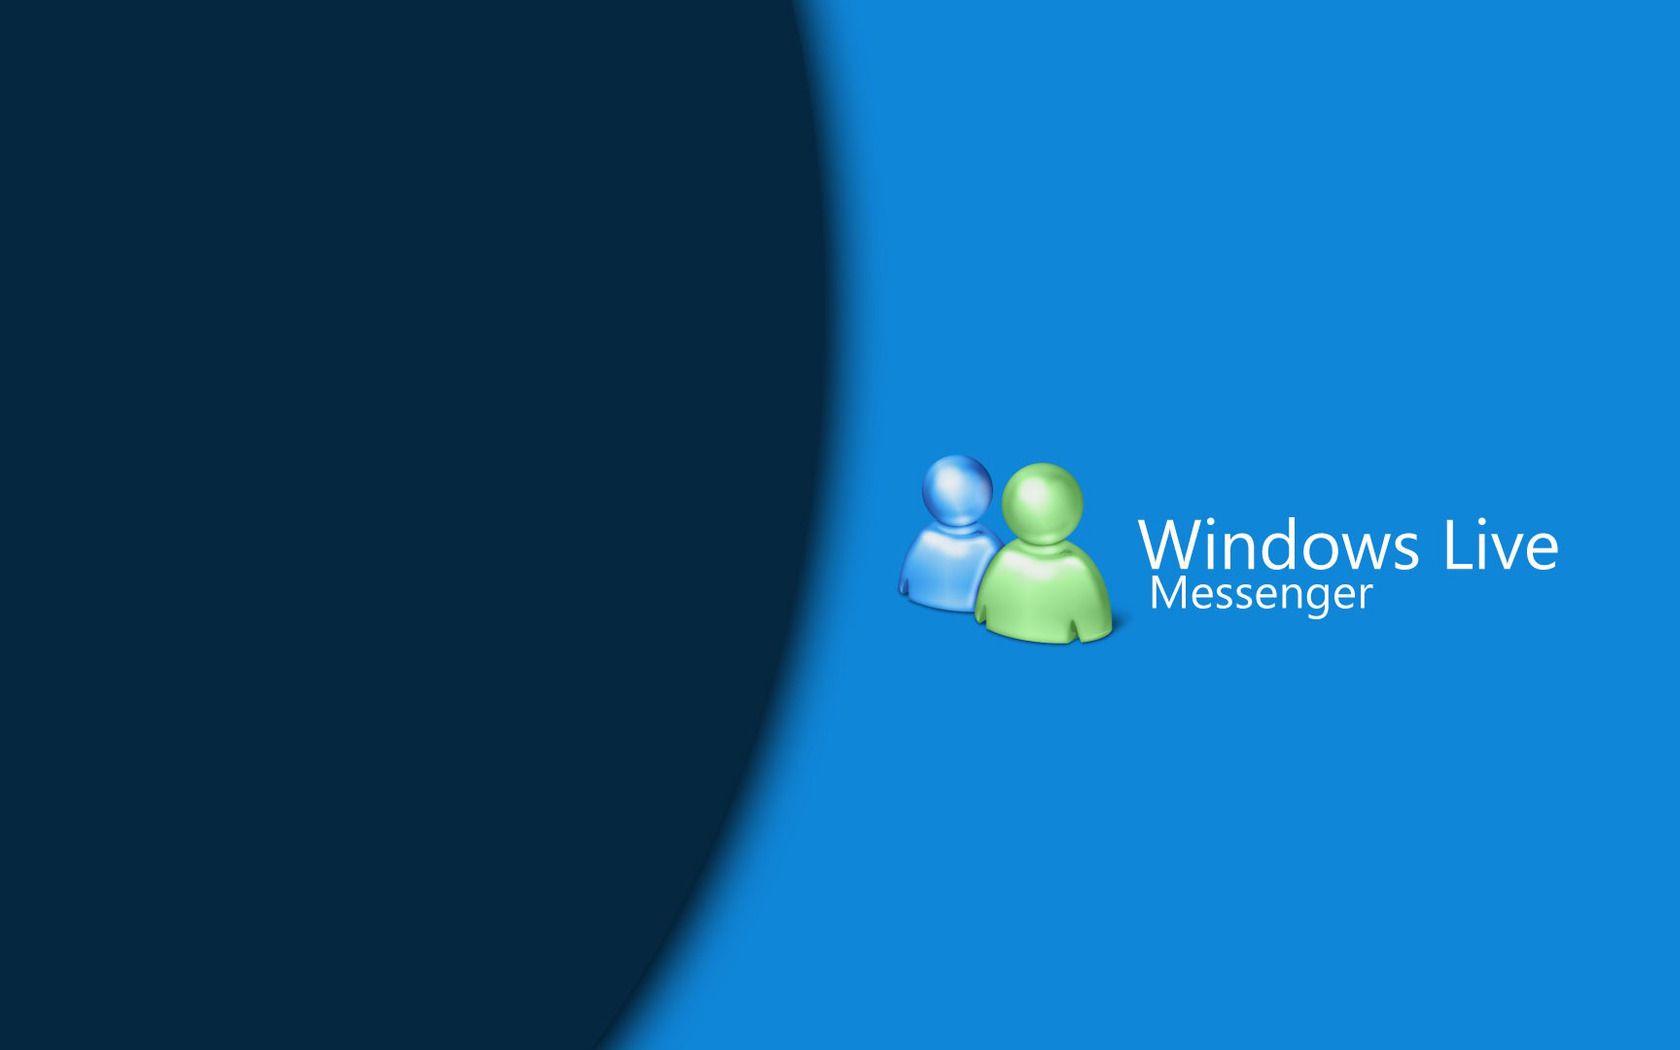 Windows Live Wallpaper